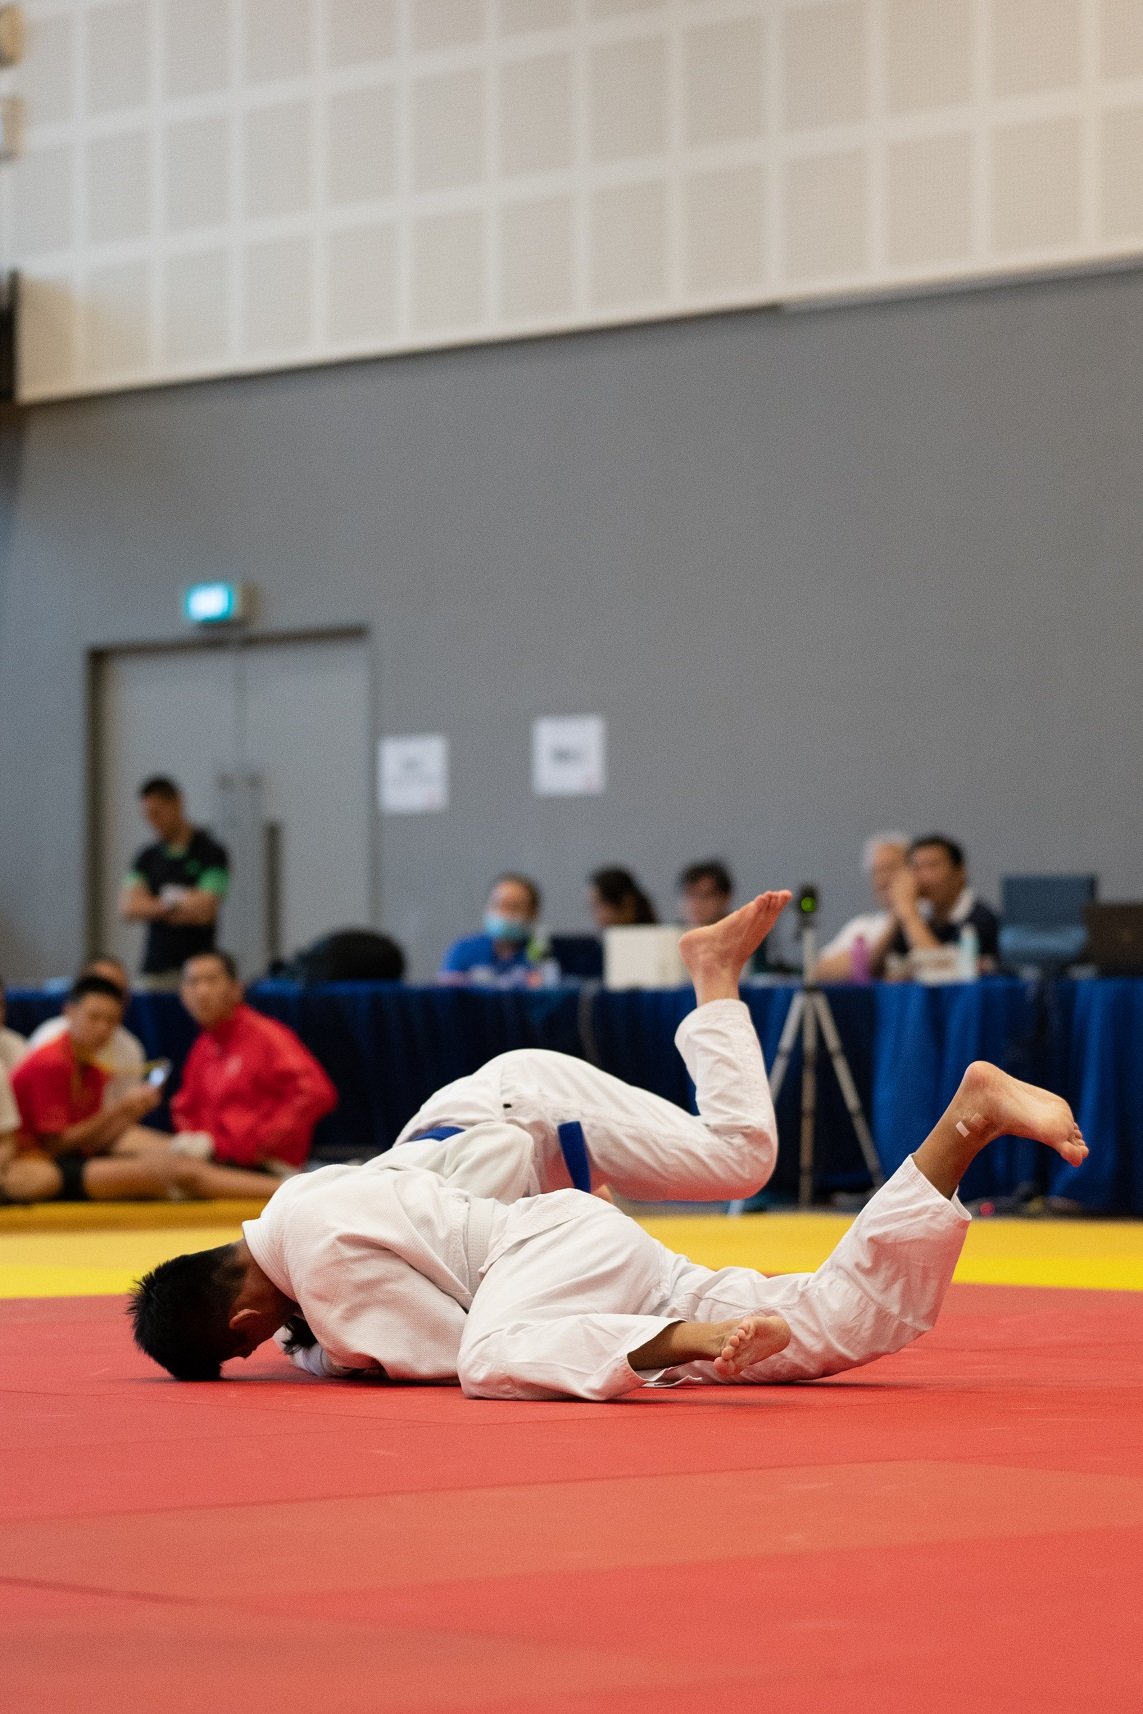 NSG 2023 Judo | Photo : Sport Singapore